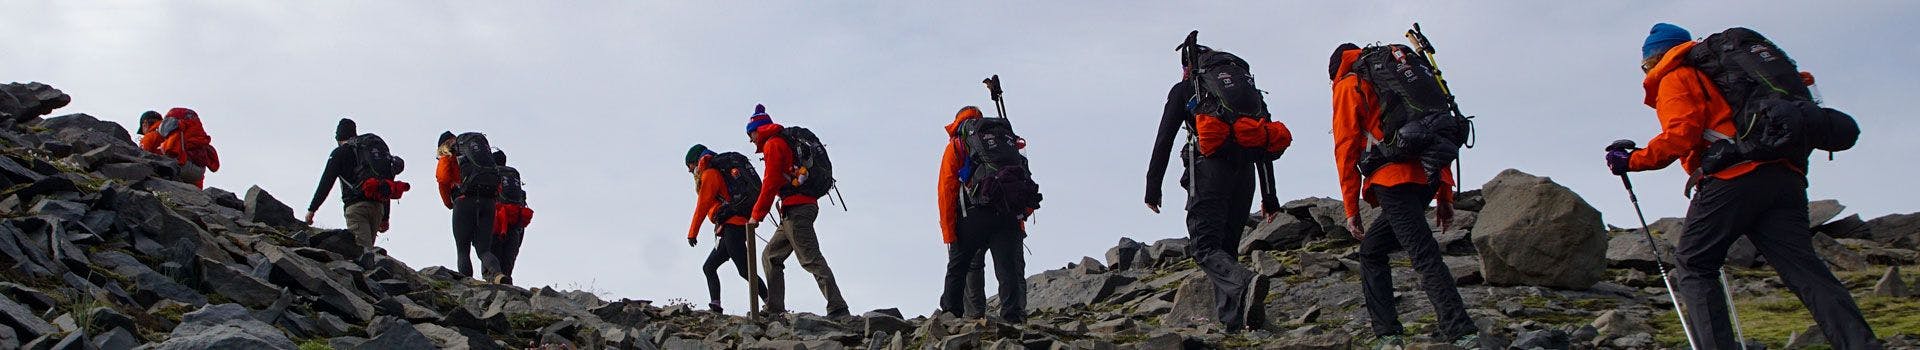 Hikers climbing up a mountain